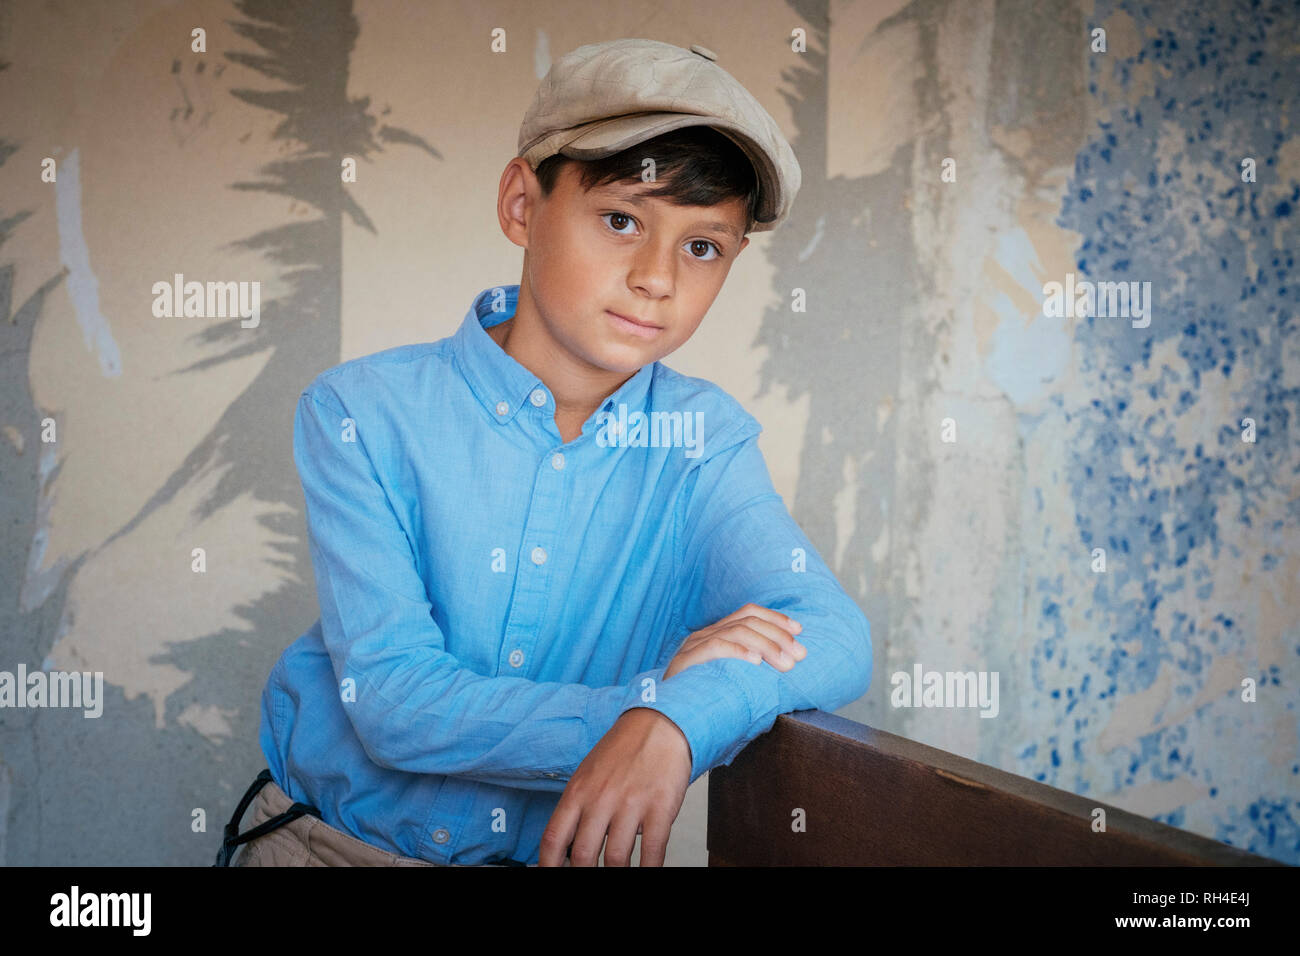 Portrait confident, well-dressed boy Stock Photo